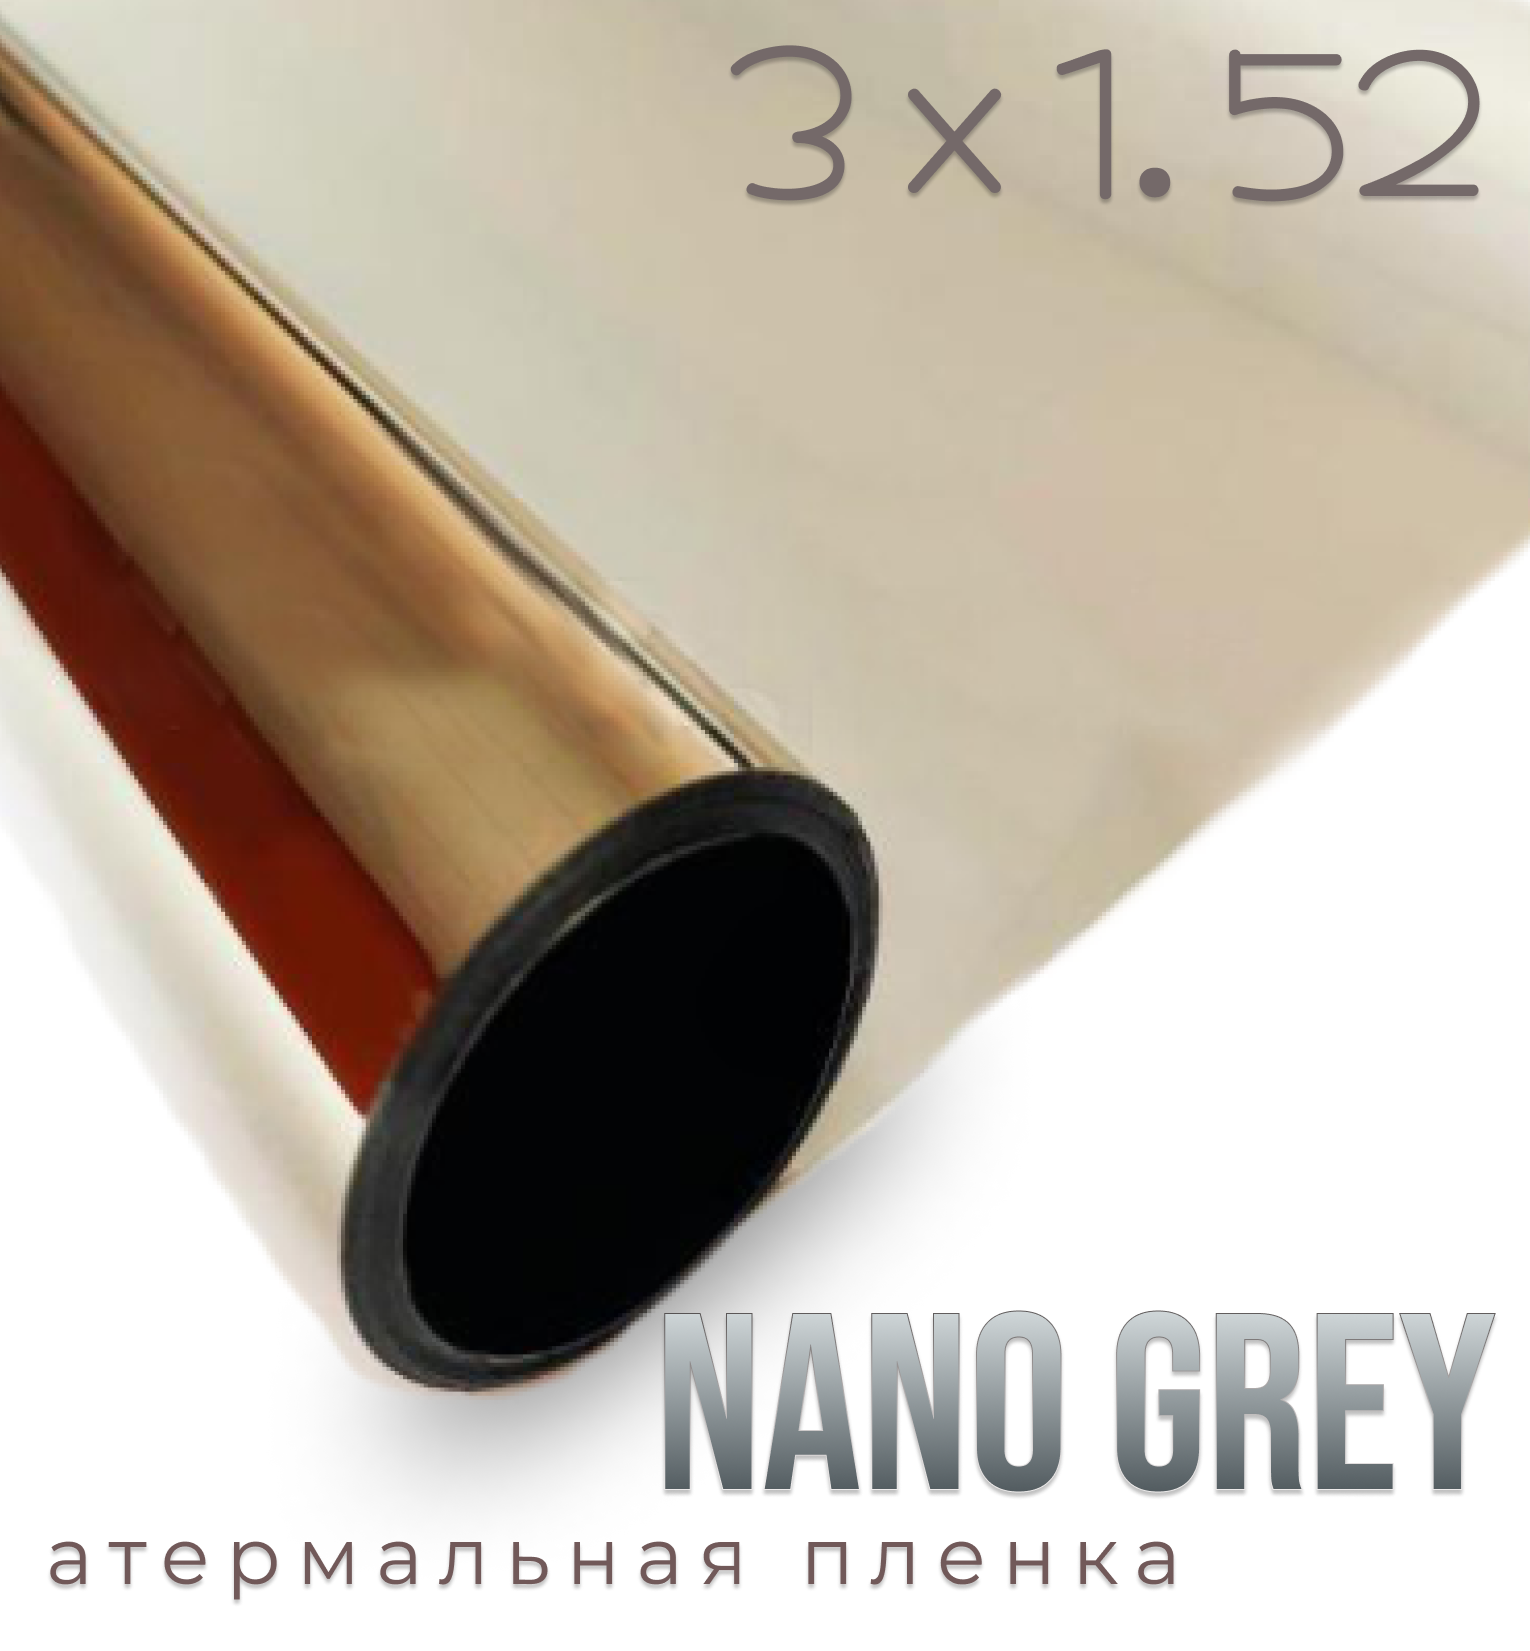 Пленка от солнца атермальная теплоотражающая Nano Grey, 1,52х3